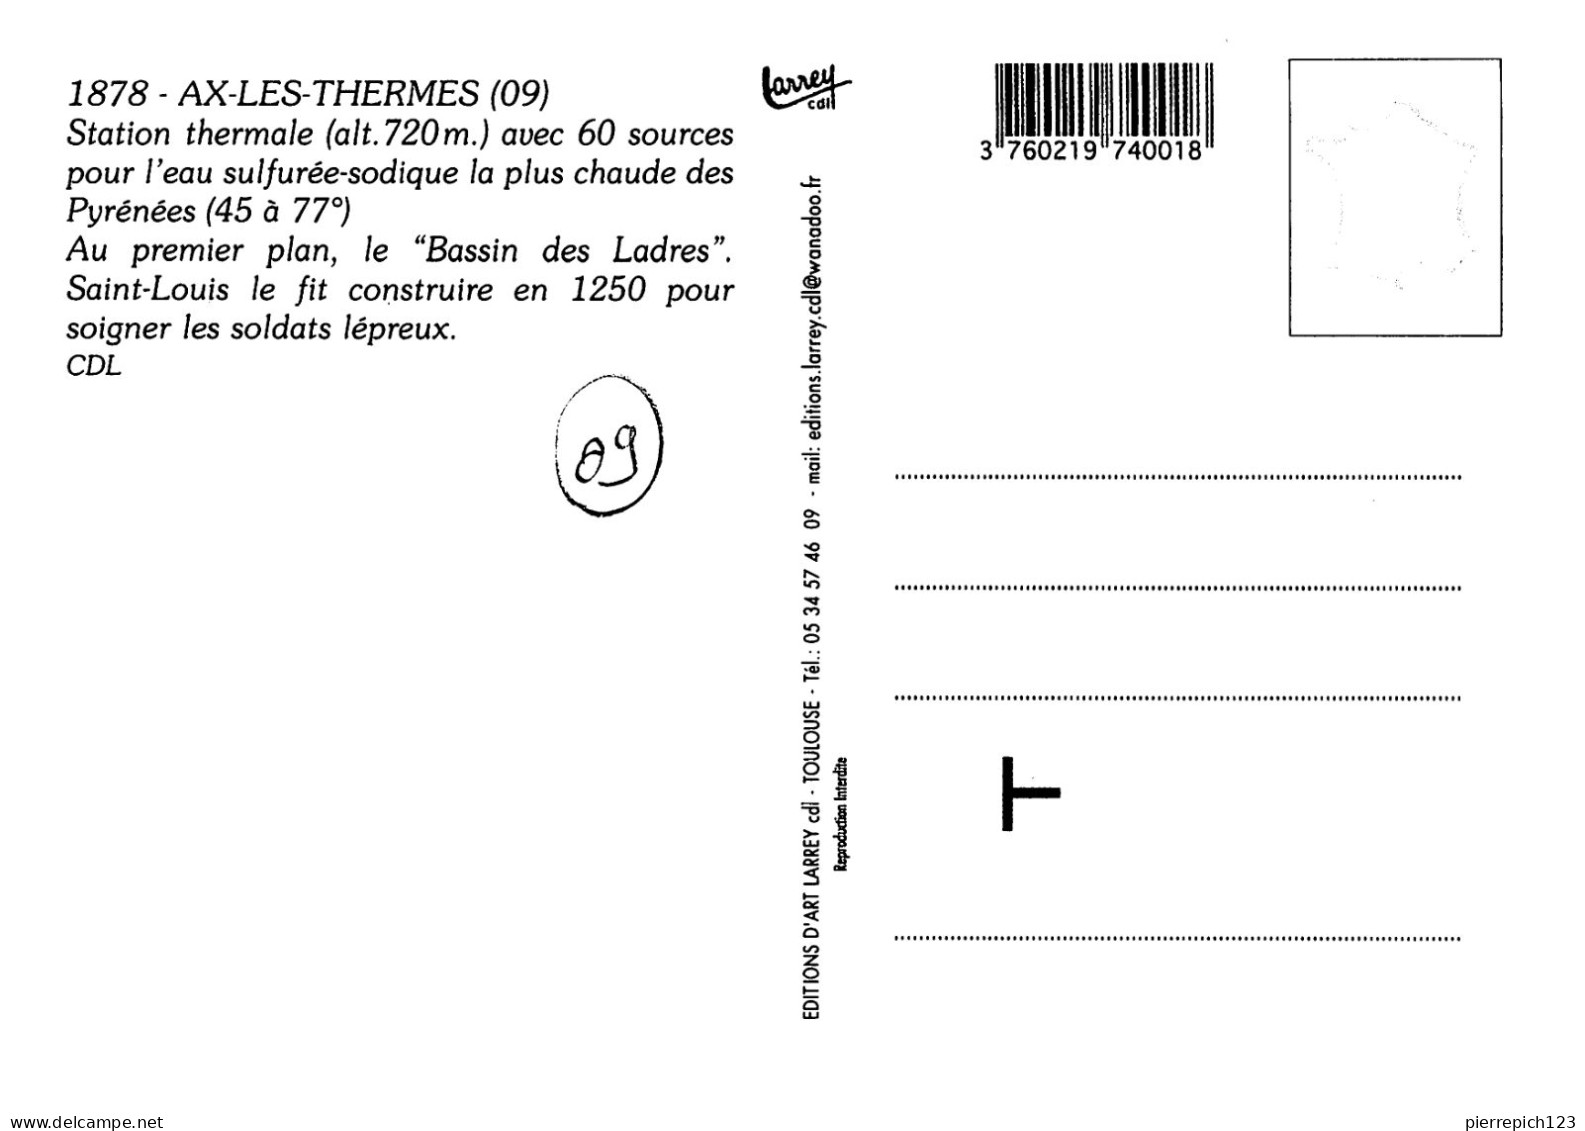 09 - Ax Les Thermes - Le Bassin Des Ladres - Ax Les Thermes